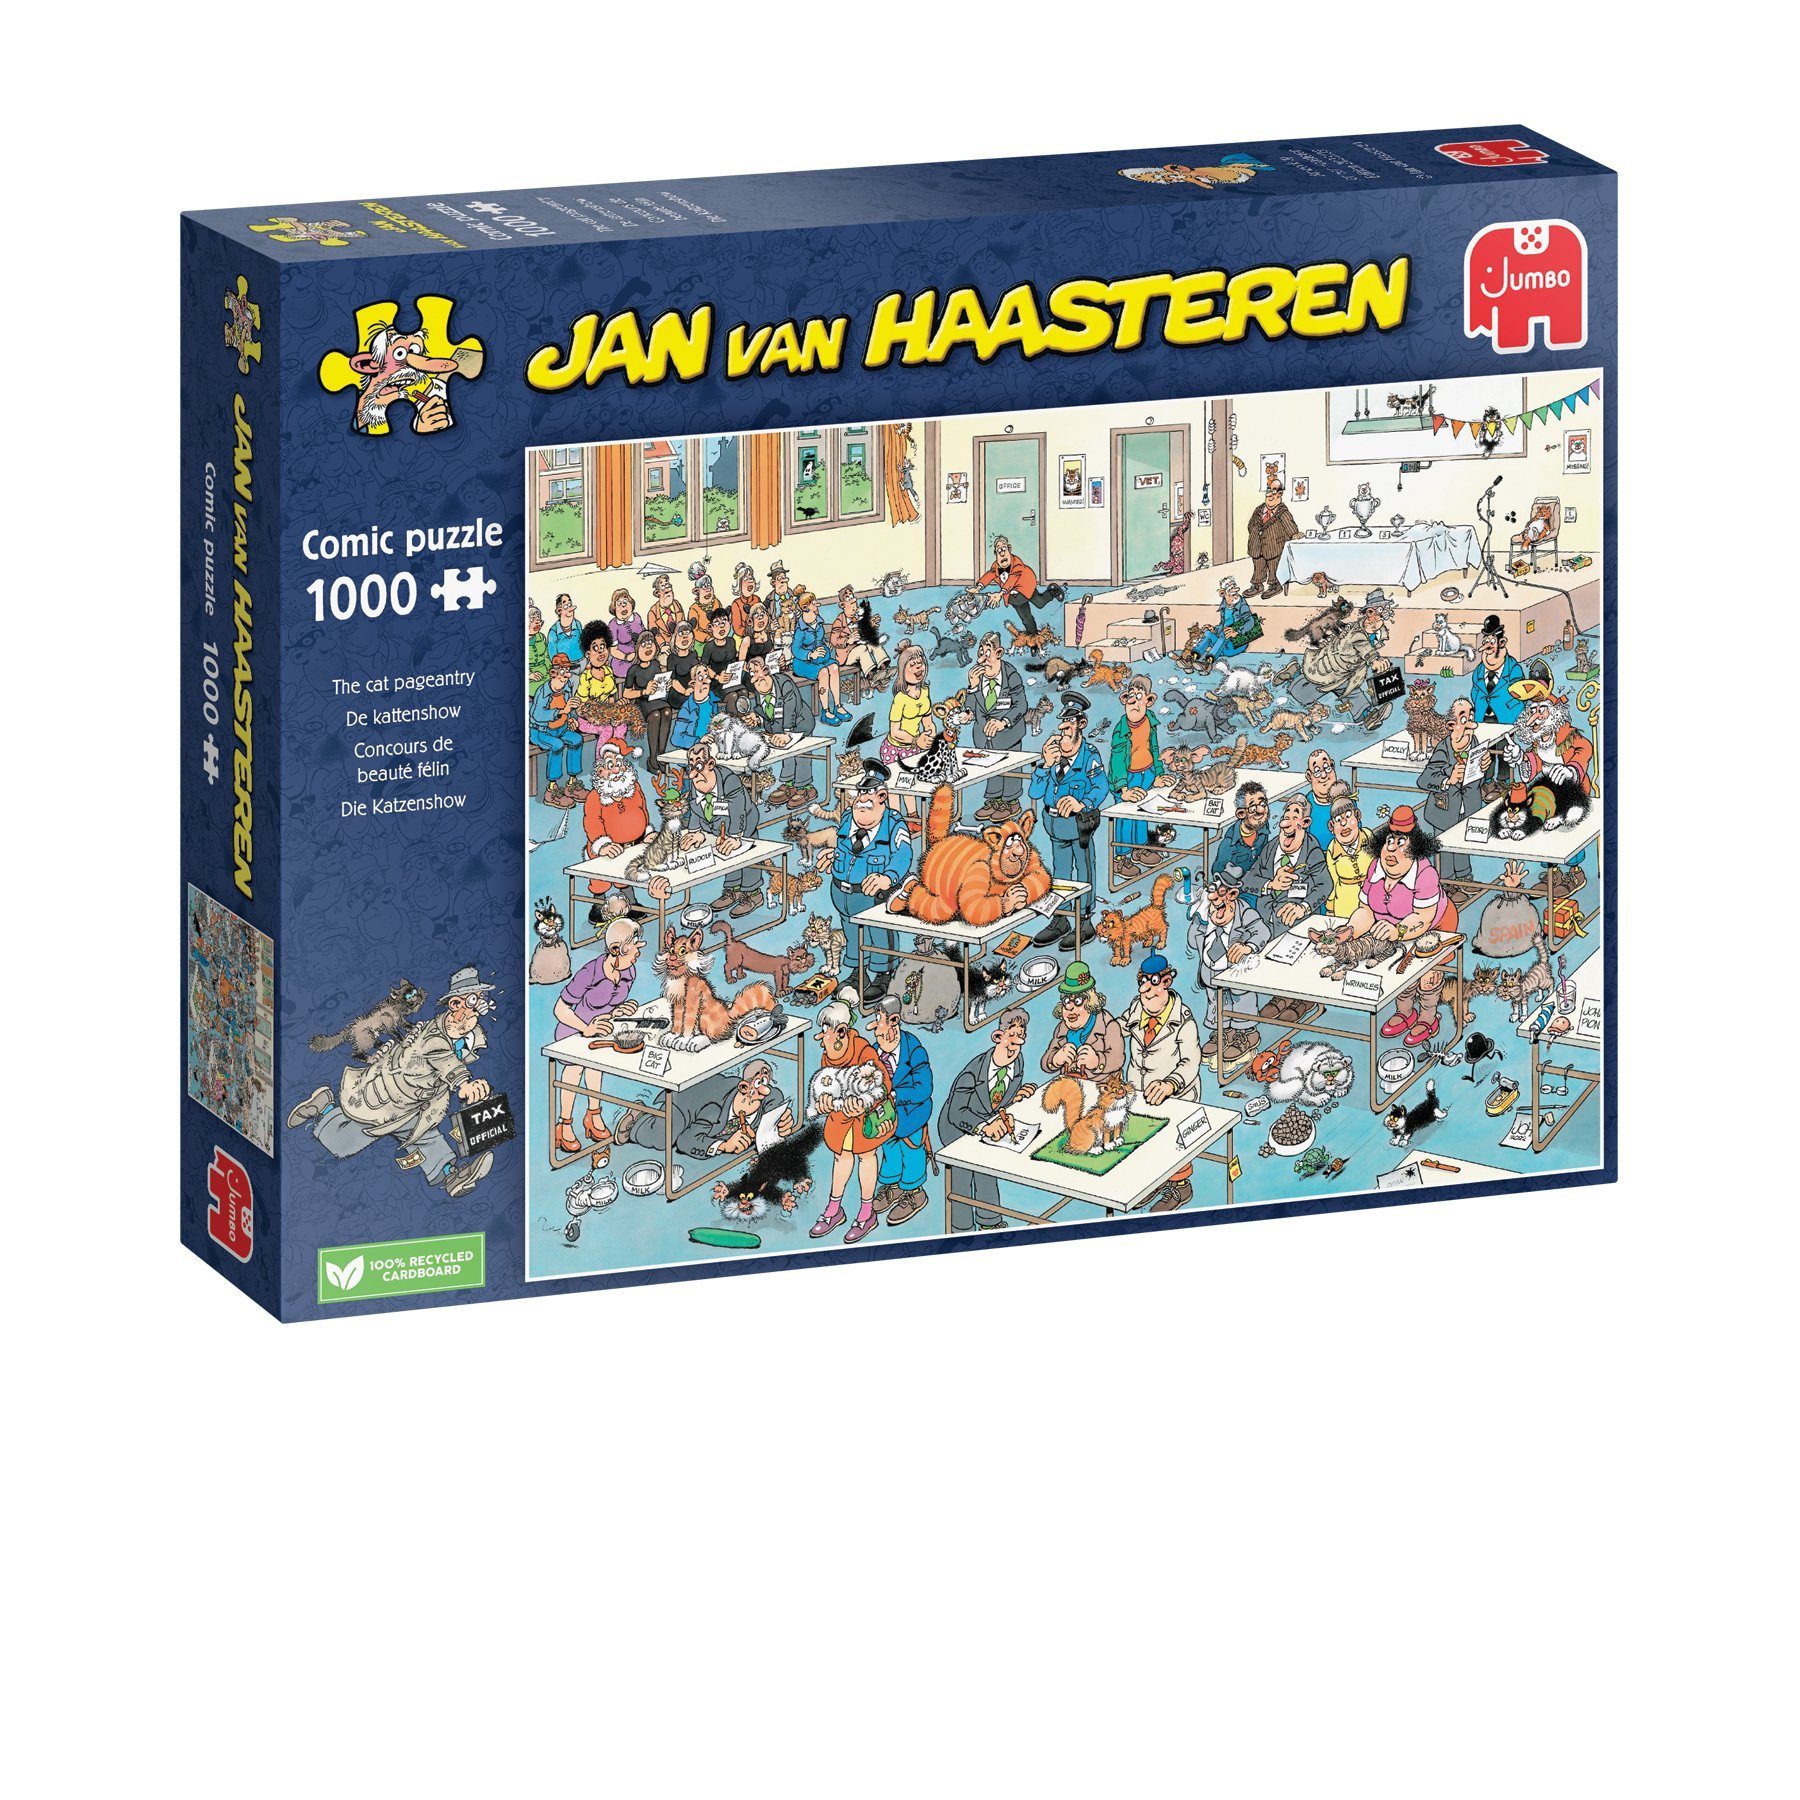 Jumbo Spiele Puzzle 1110100032 Jan van Haasteren Die Katzenshow, 1000 Puzzleteile | Puzzle